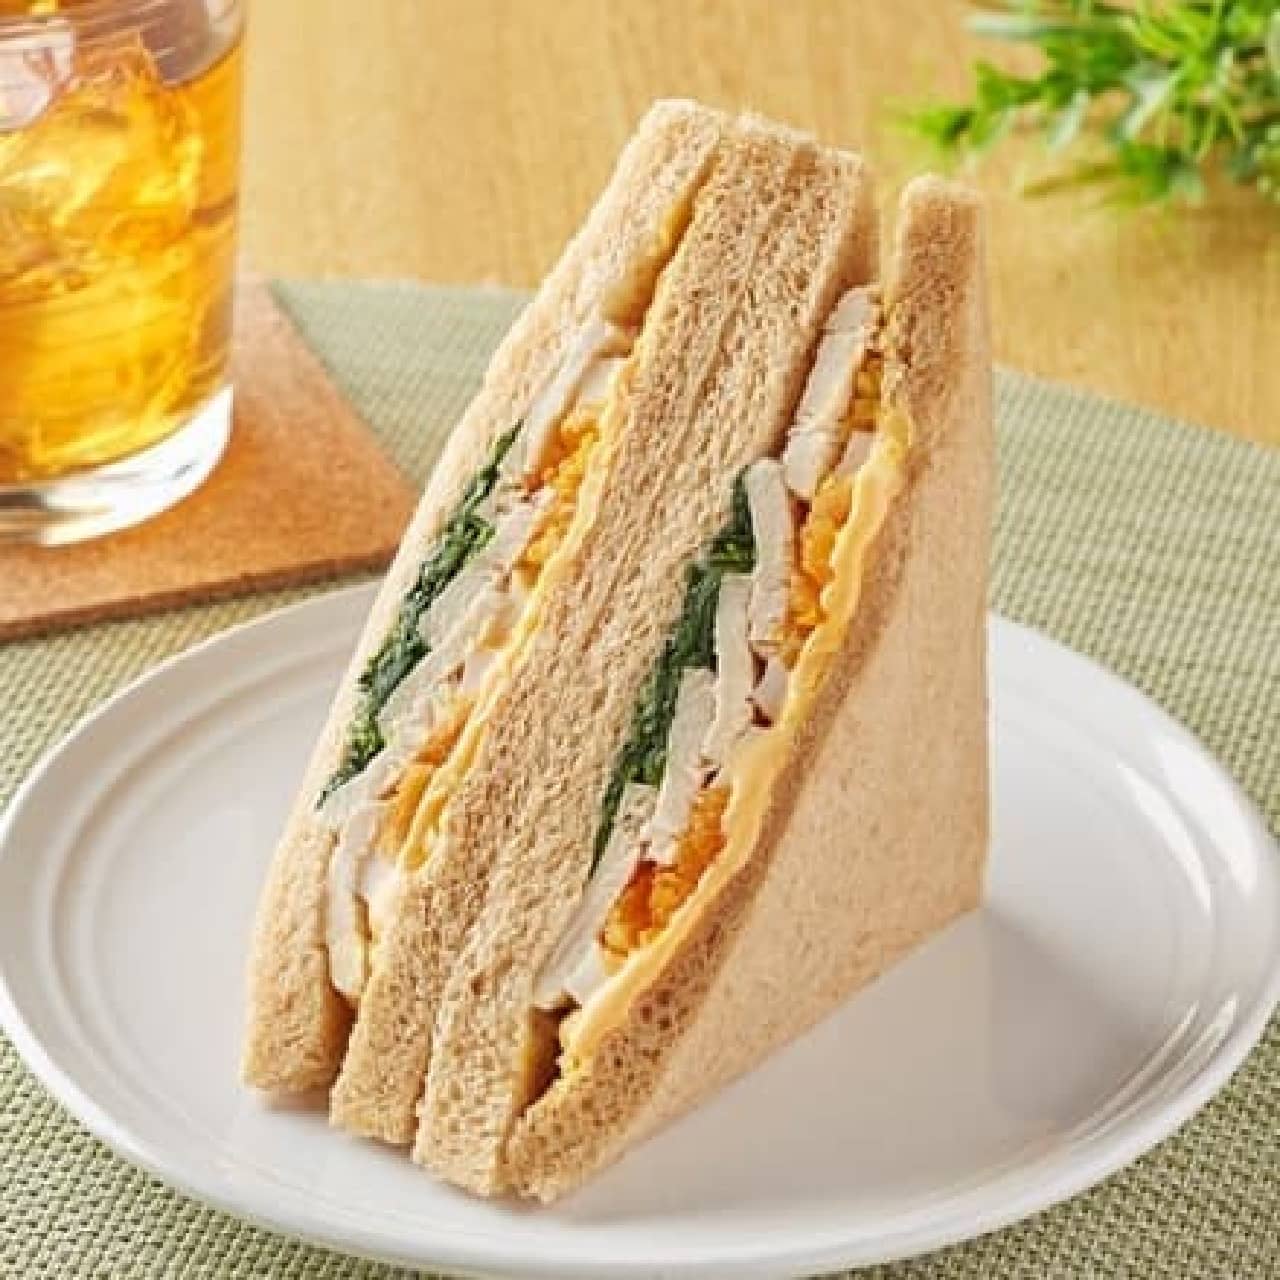 FamilyMart "Whole grain sandwich salad chicken and soft-boiled egg"